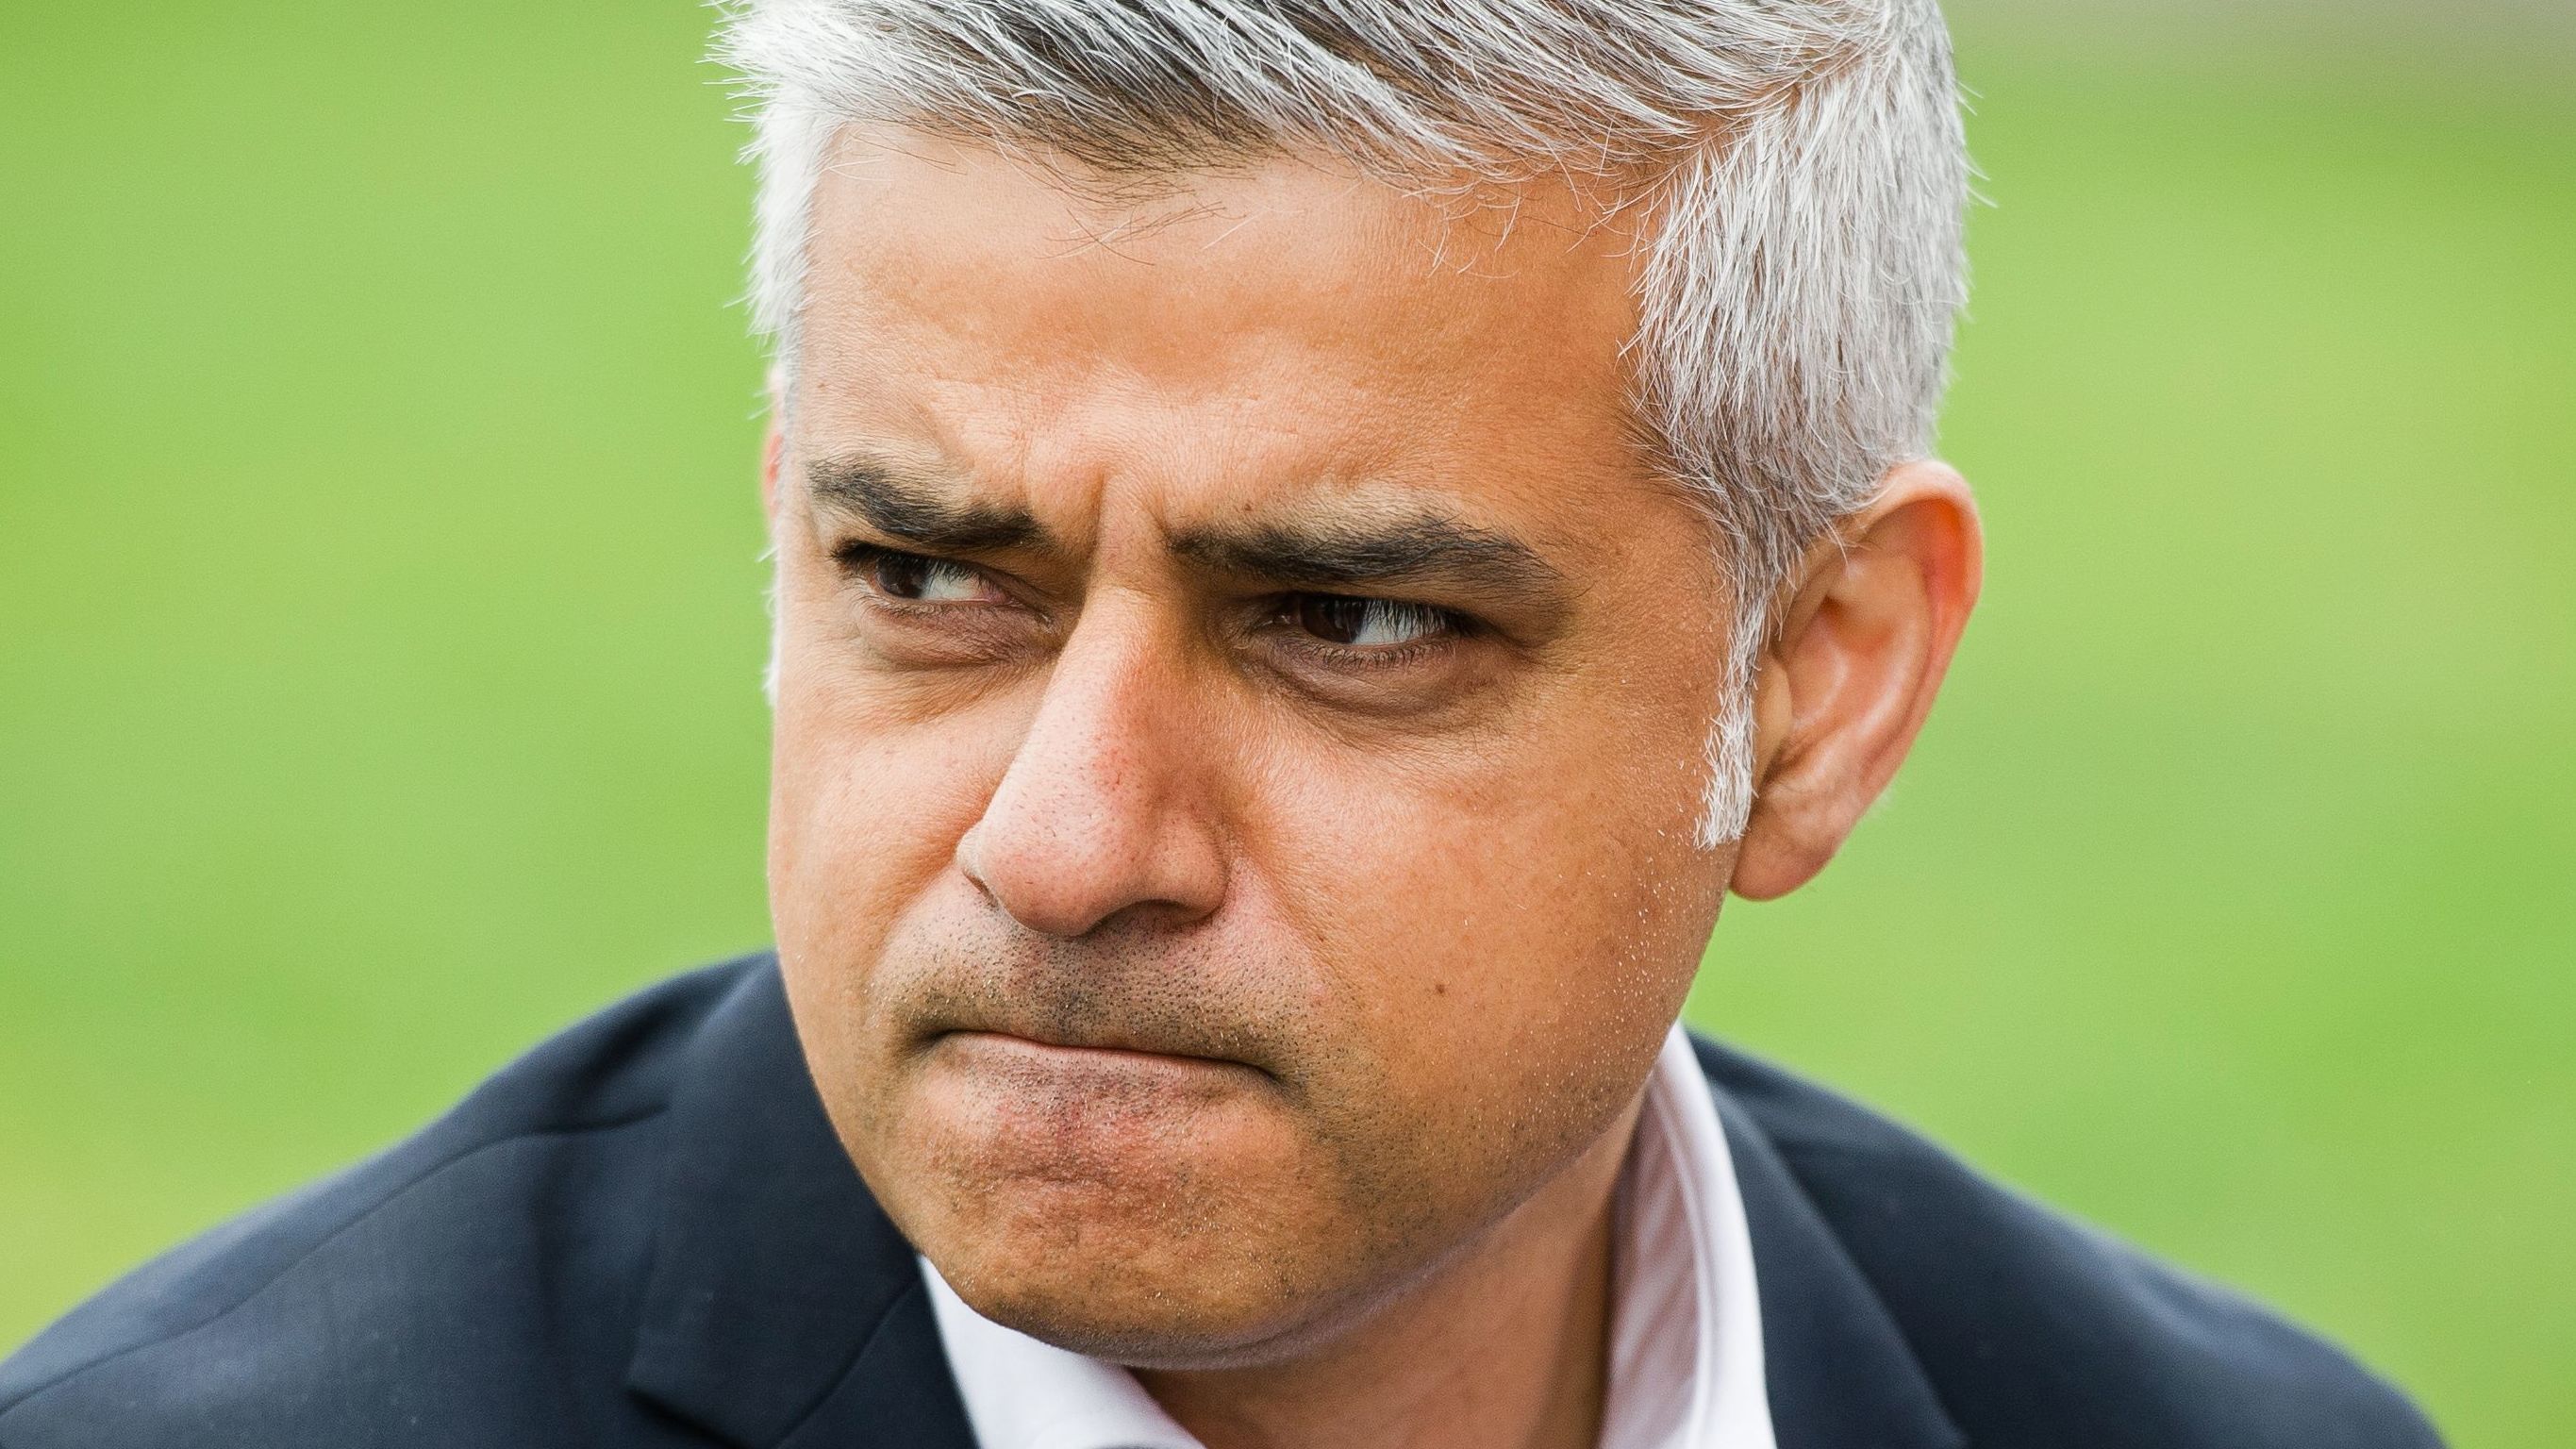 Mayor of London Sadiq Khan has criticized the government's Brexit plans.